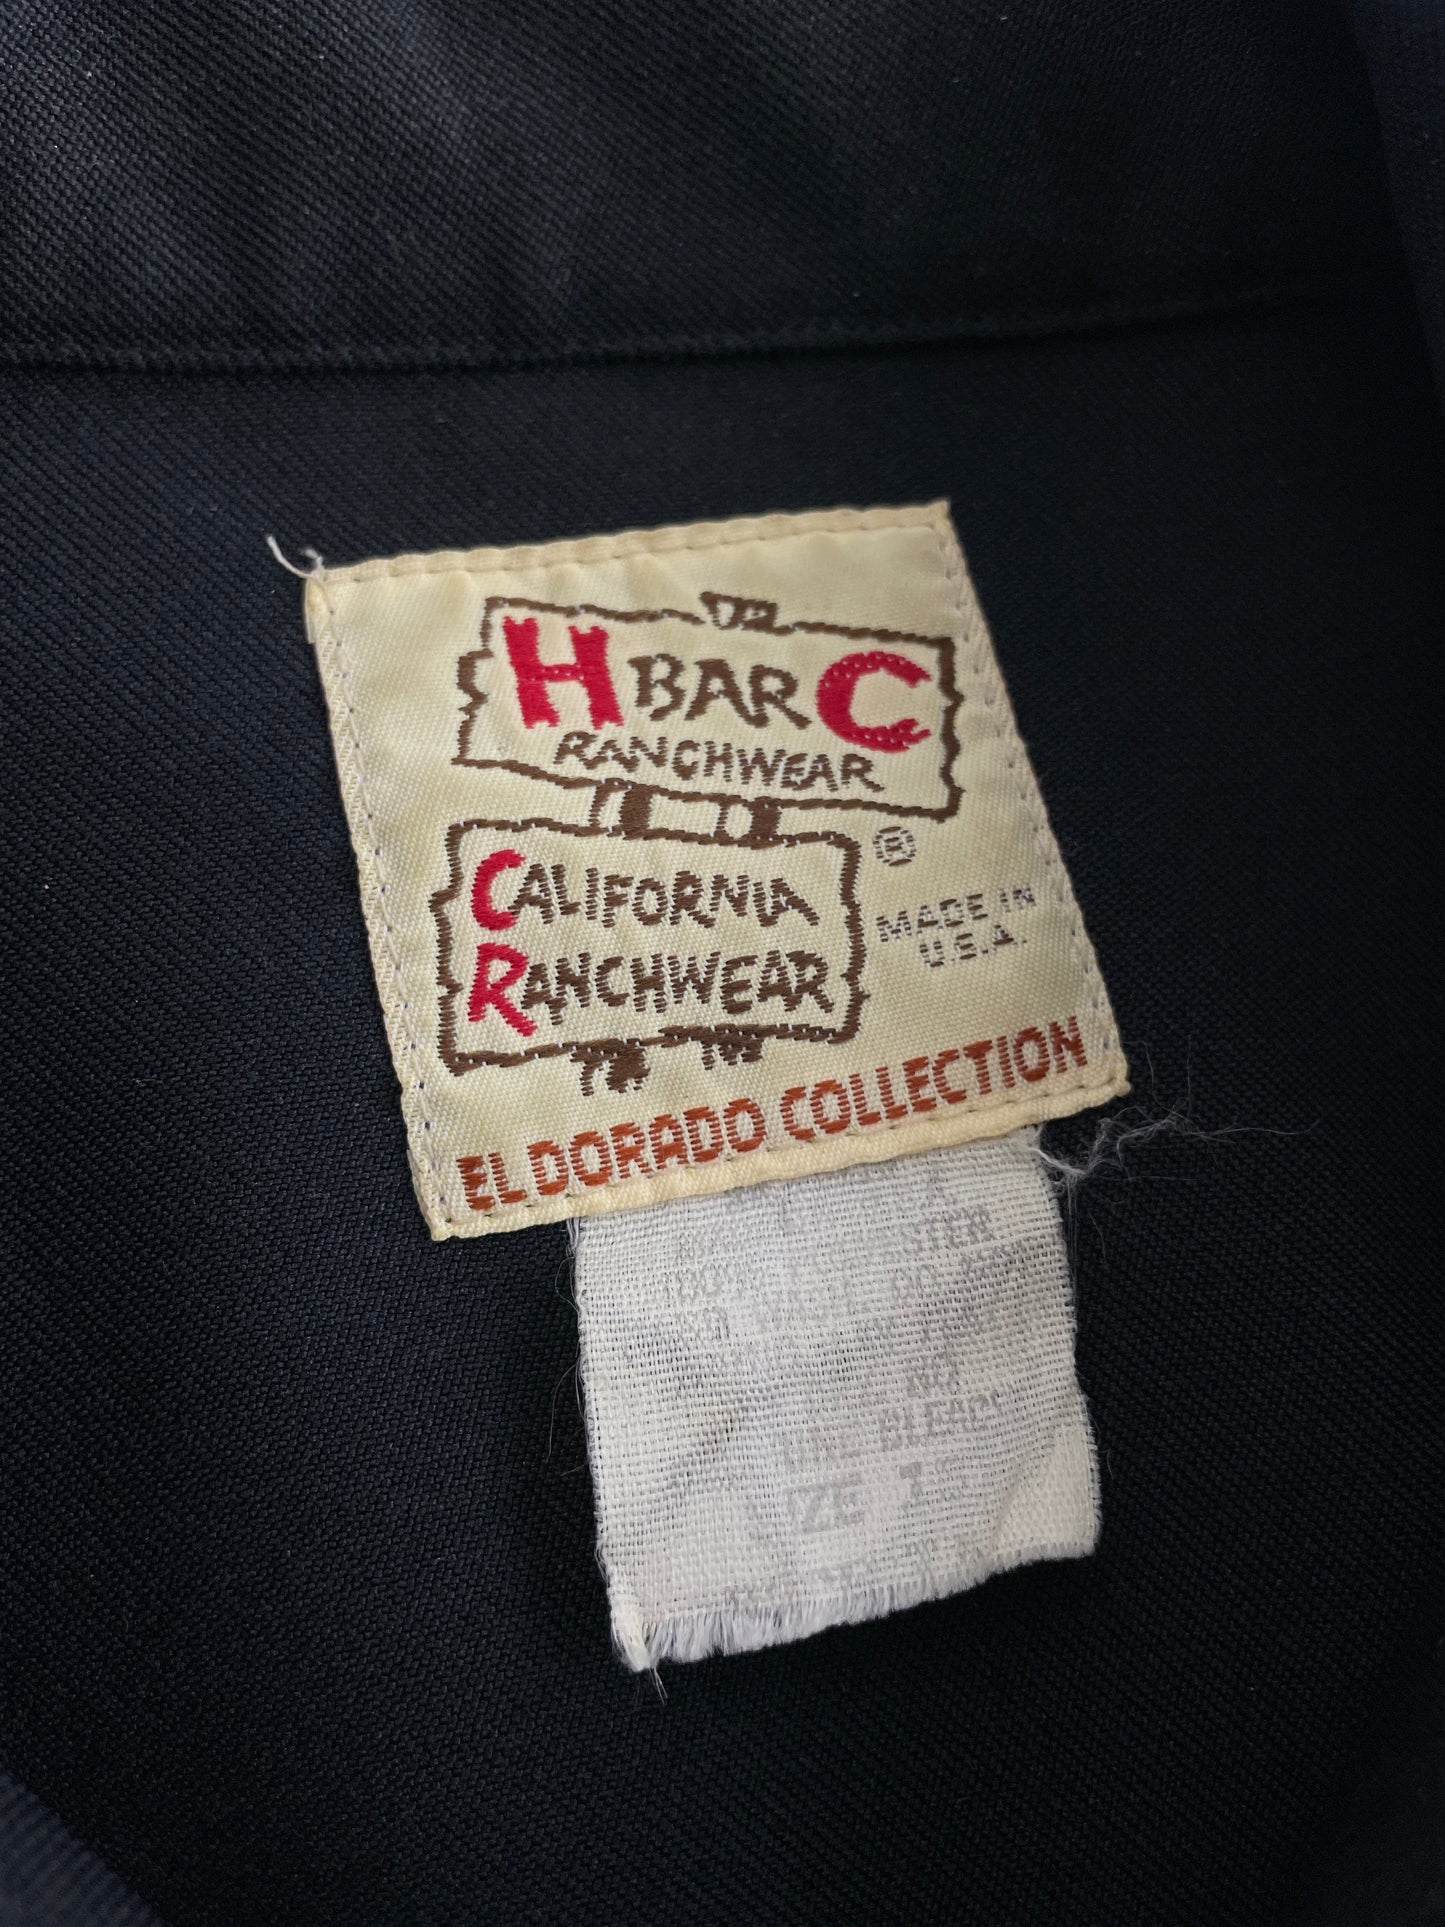 H Bar C Western Shirt [L]